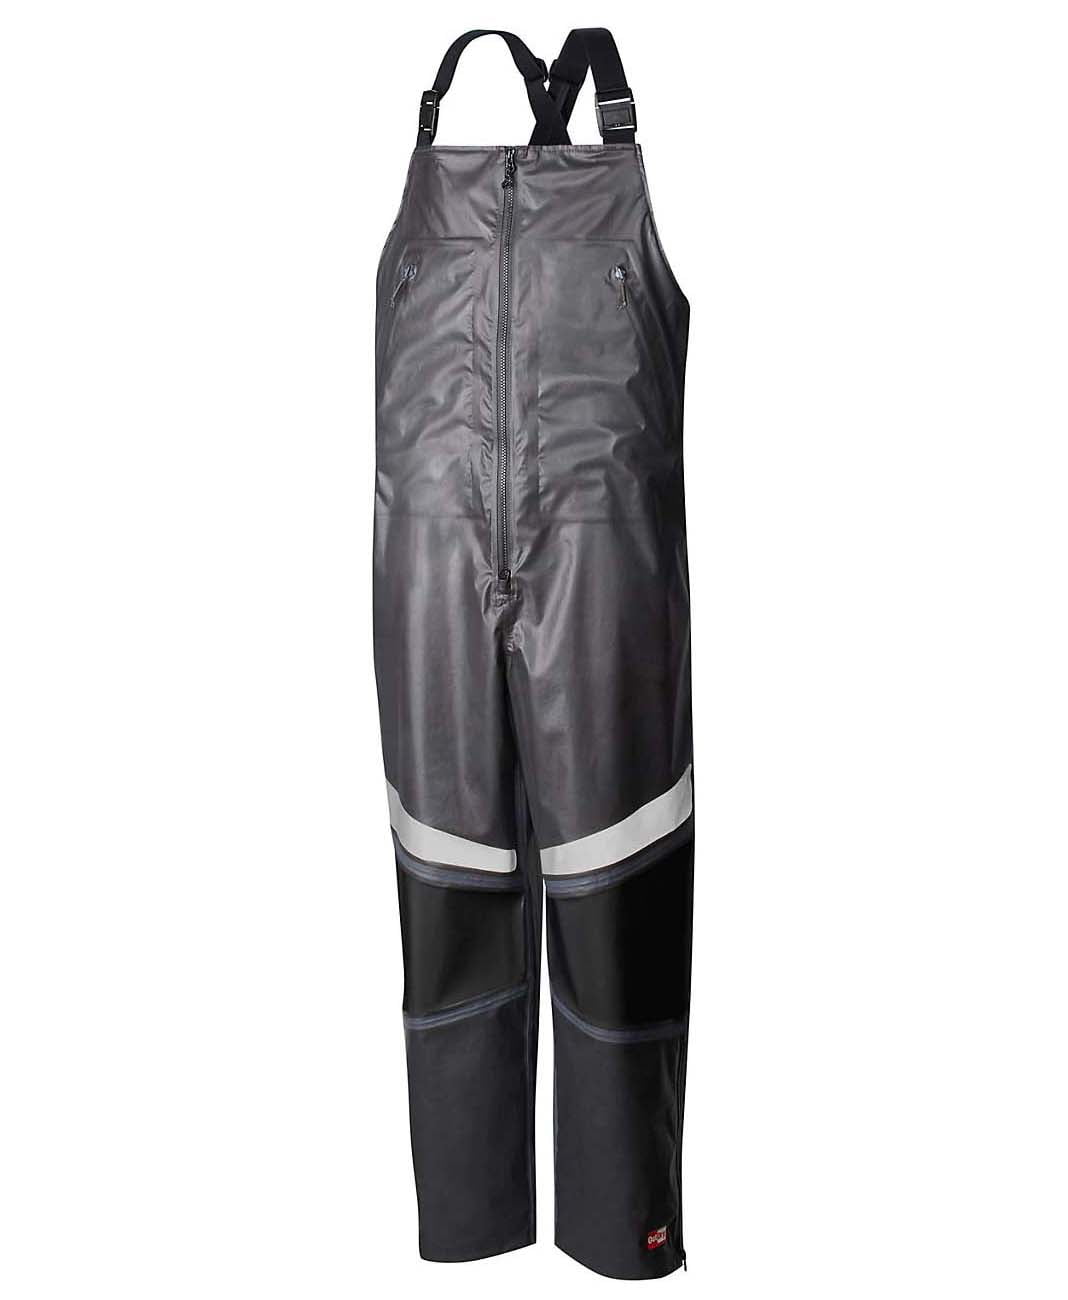 Columbia Men's PFG Force 12 Waterproof seam sealed Fishing Bib Overalls  Pants (XX-Large, Grey/Black)